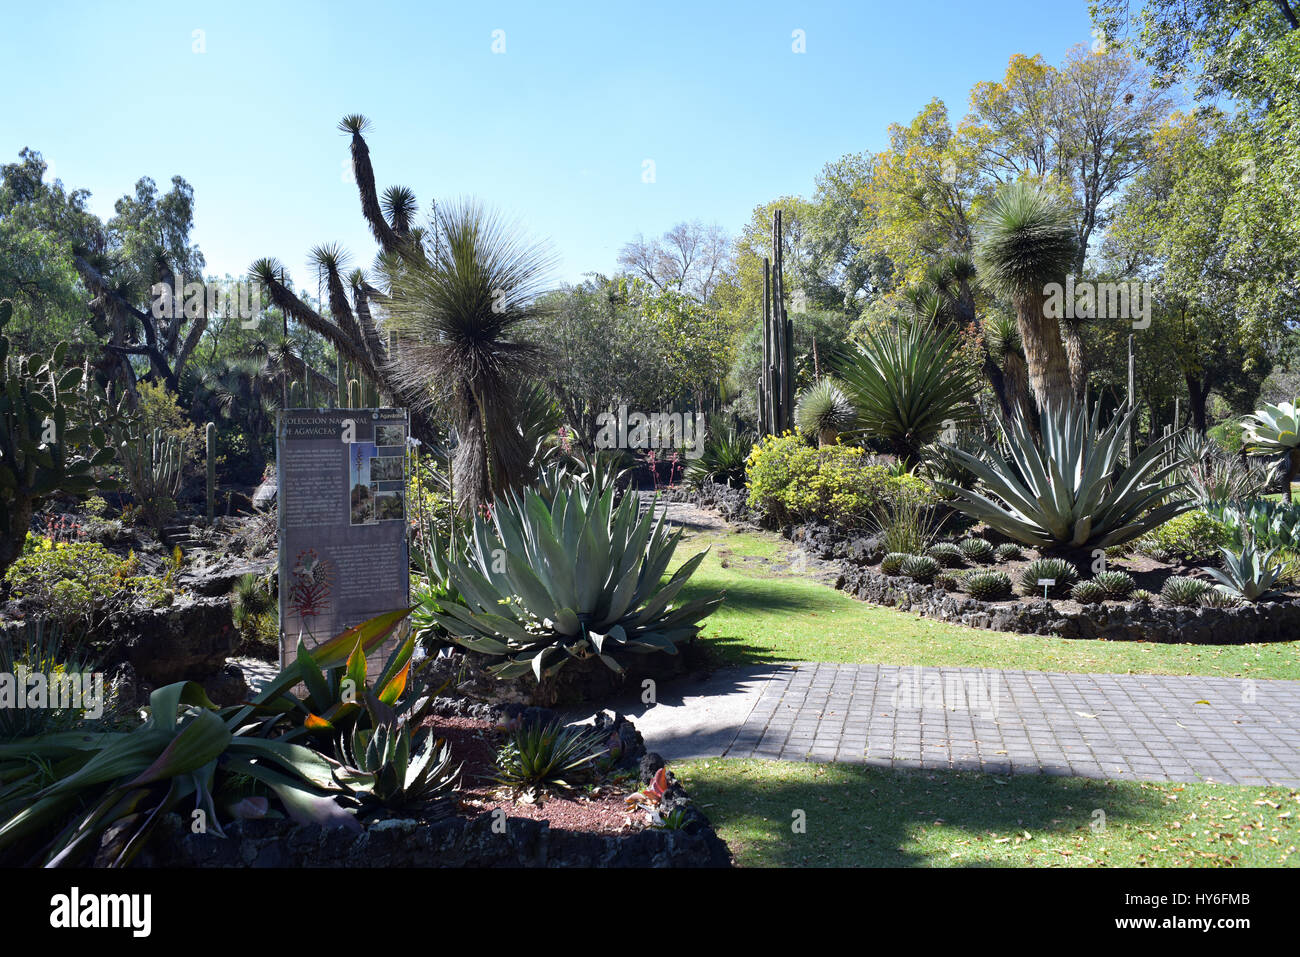 Mexico city university botanical garden Stock Photo